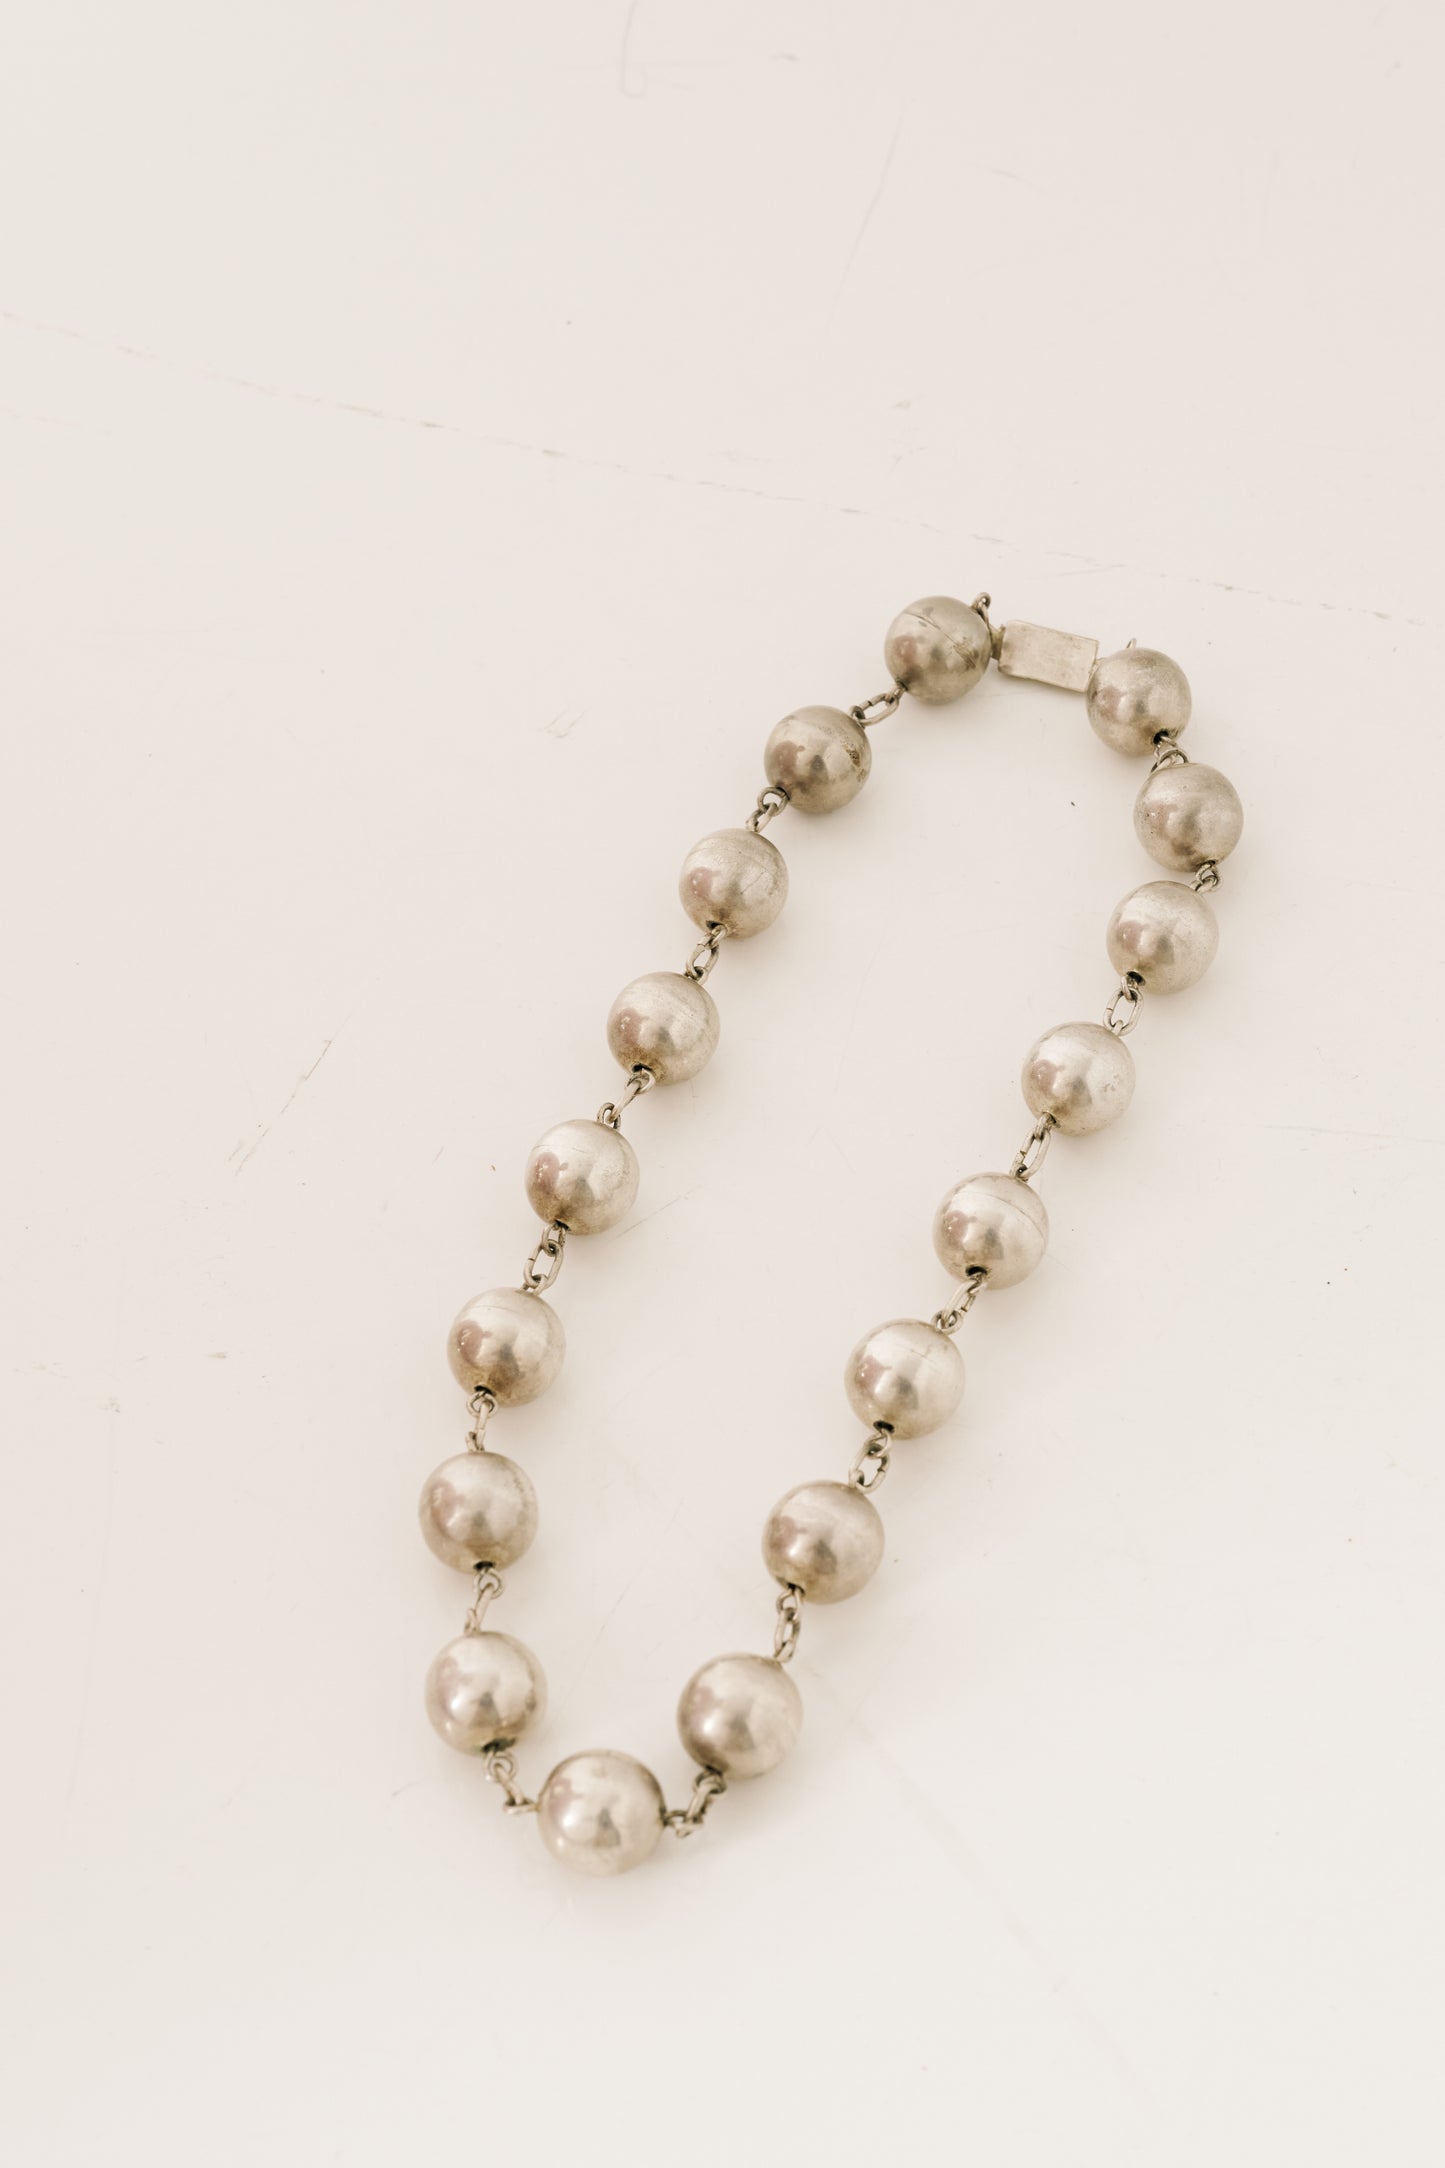 Vintage Silver Sterling Silver Necklace